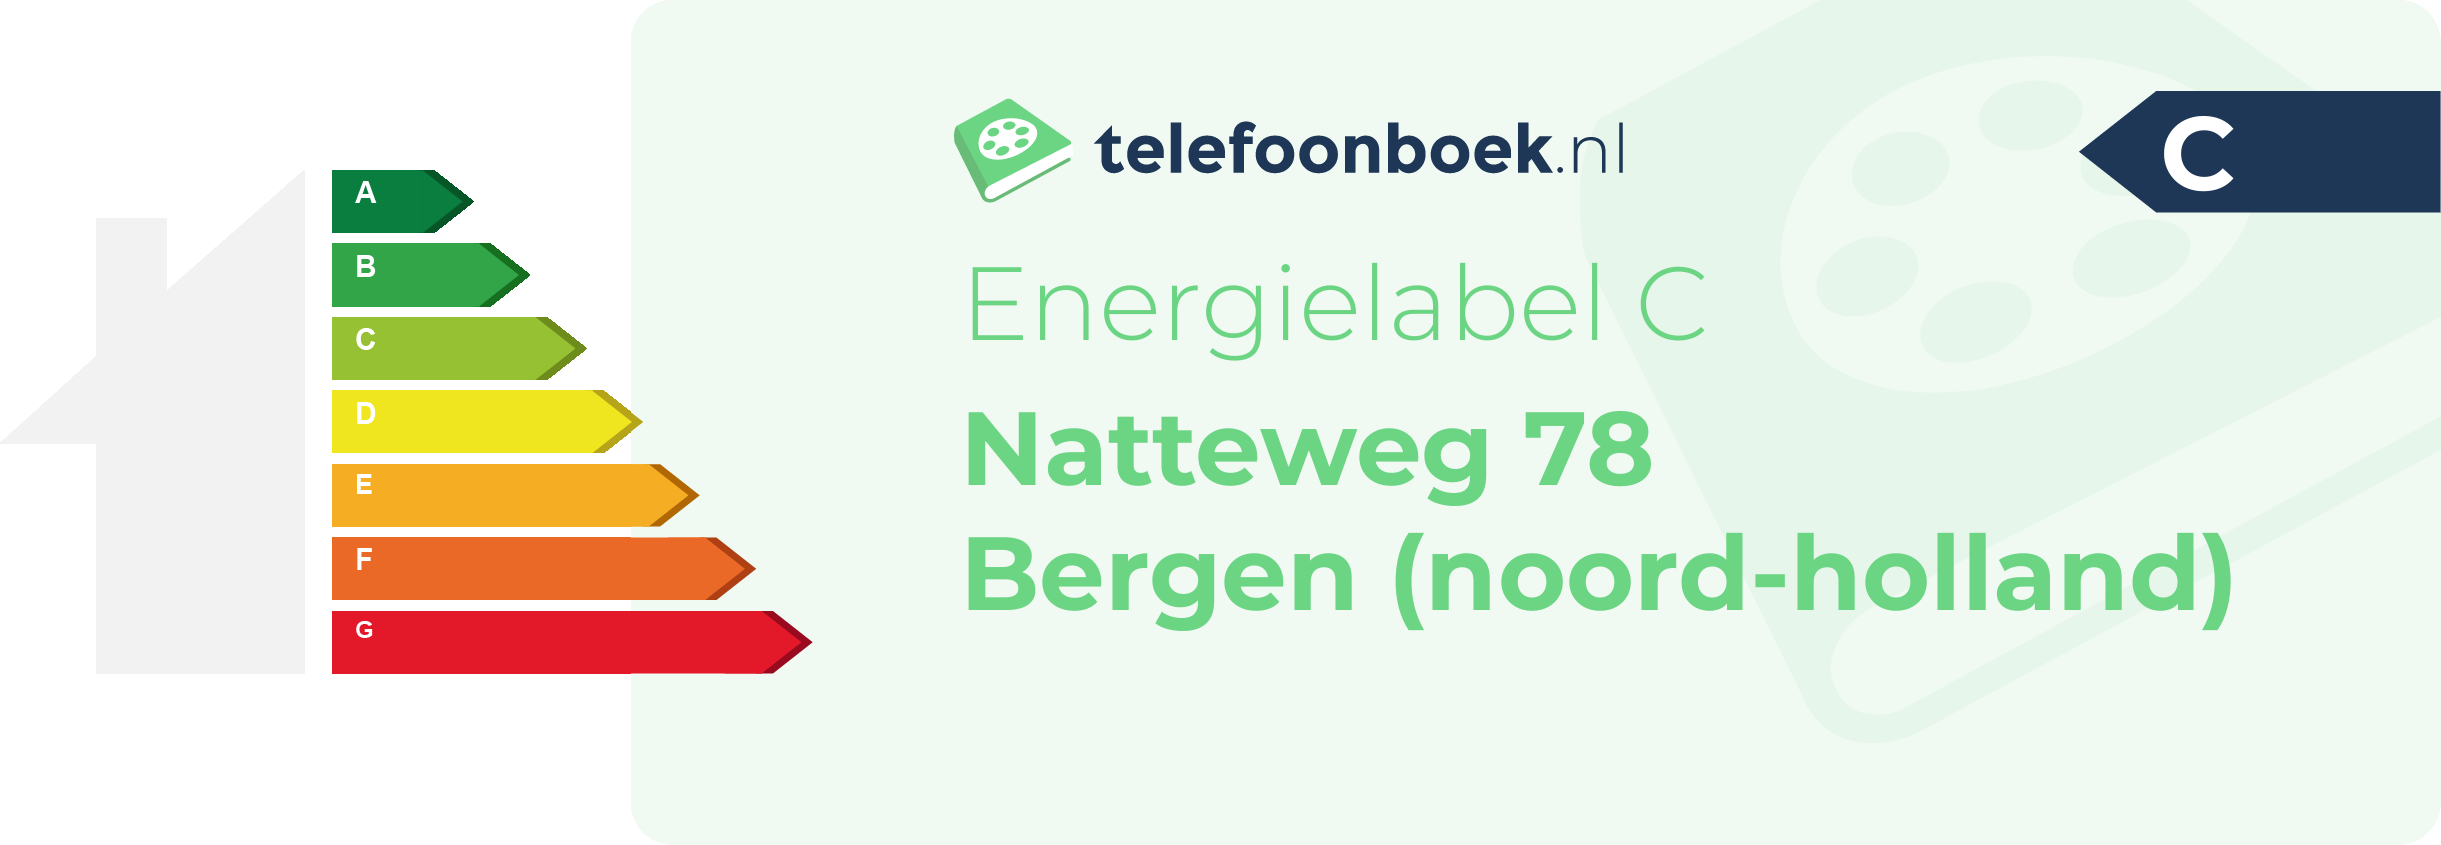 Energielabel Natteweg 78 Bergen (Noord-Holland)